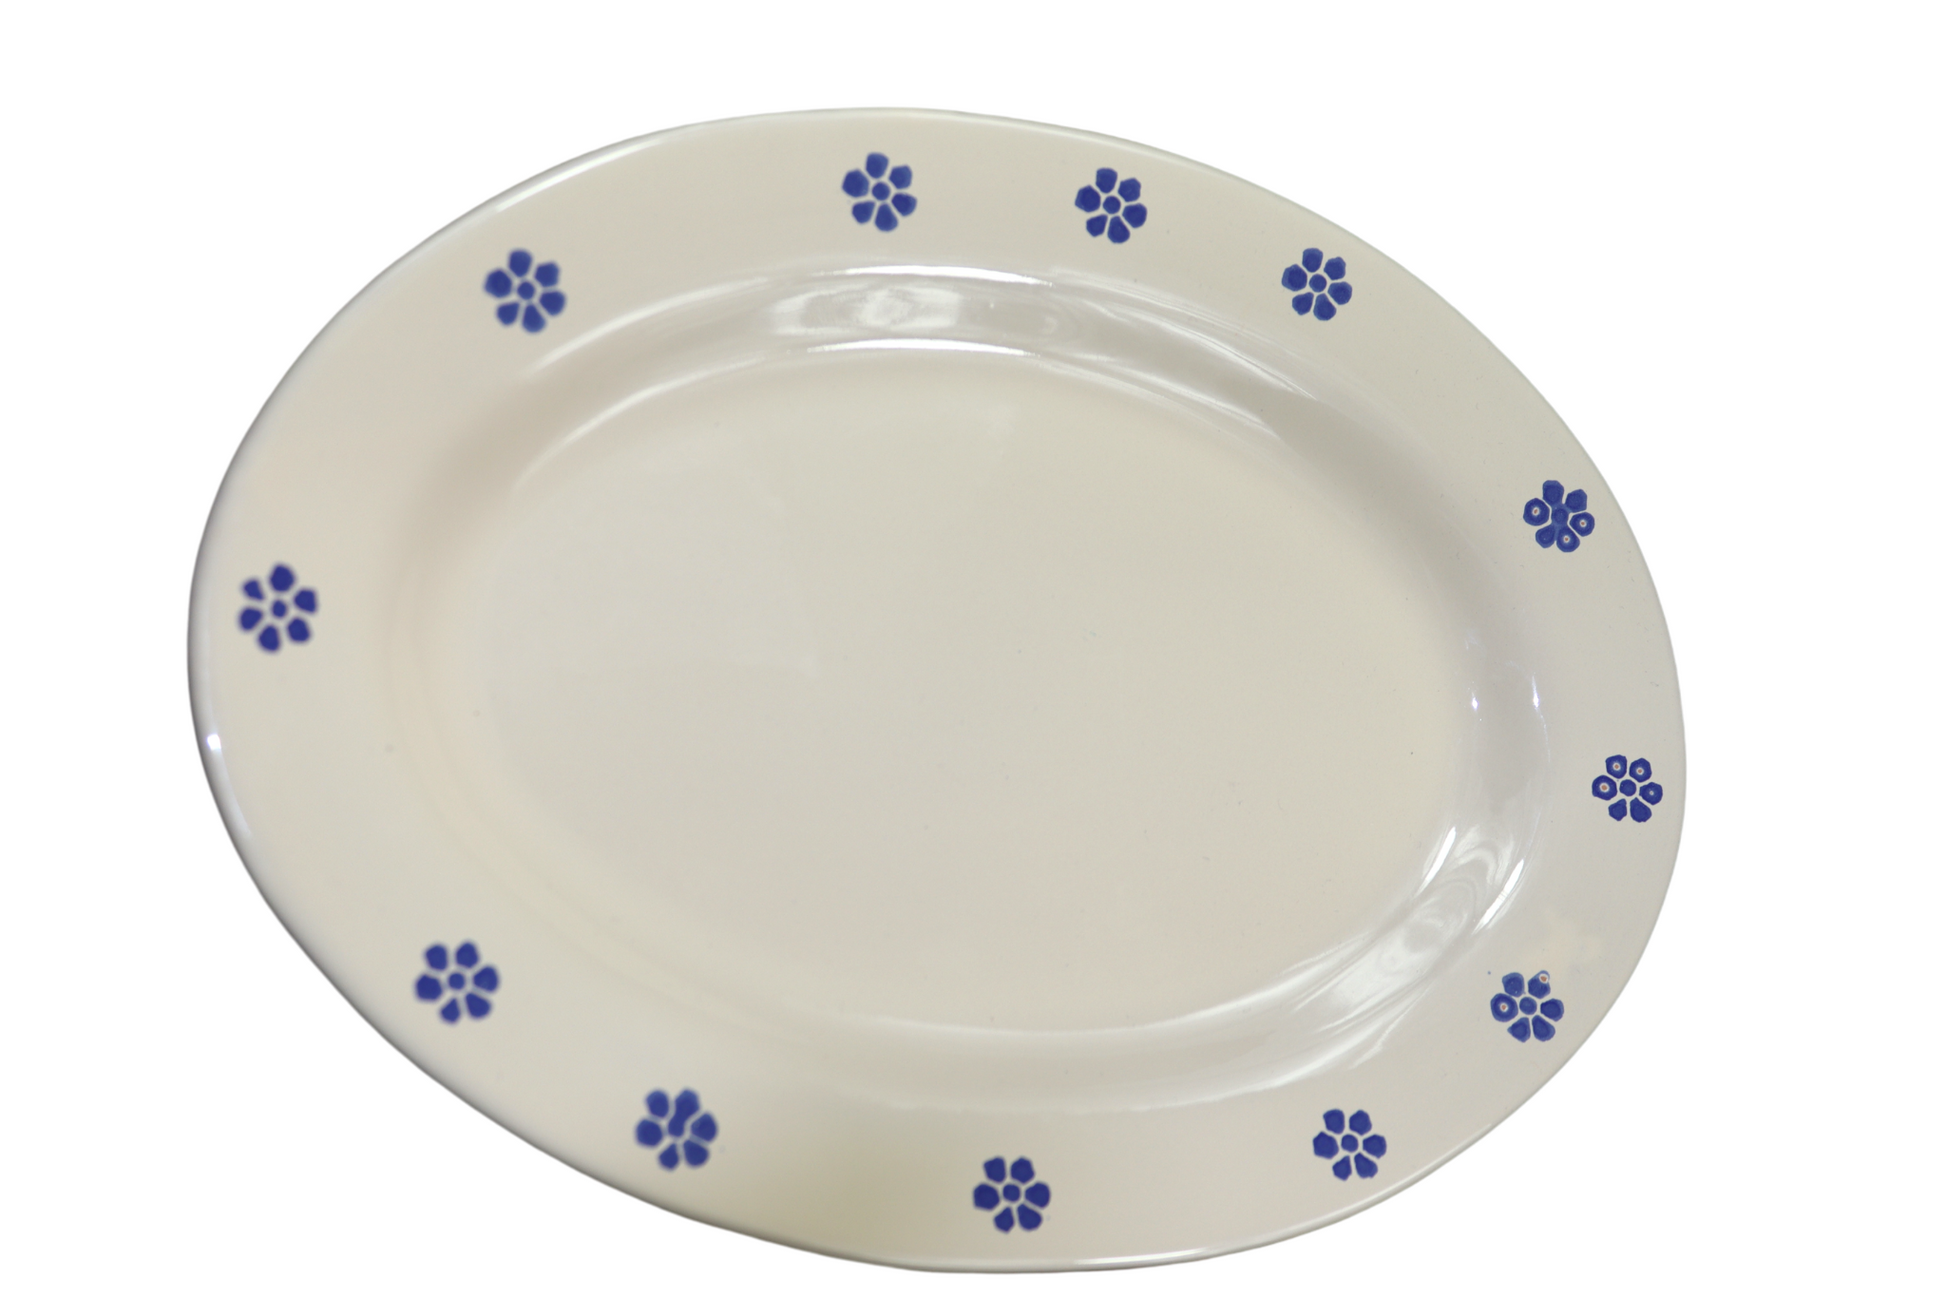 piatto ovale in ceramica grande sperlunga